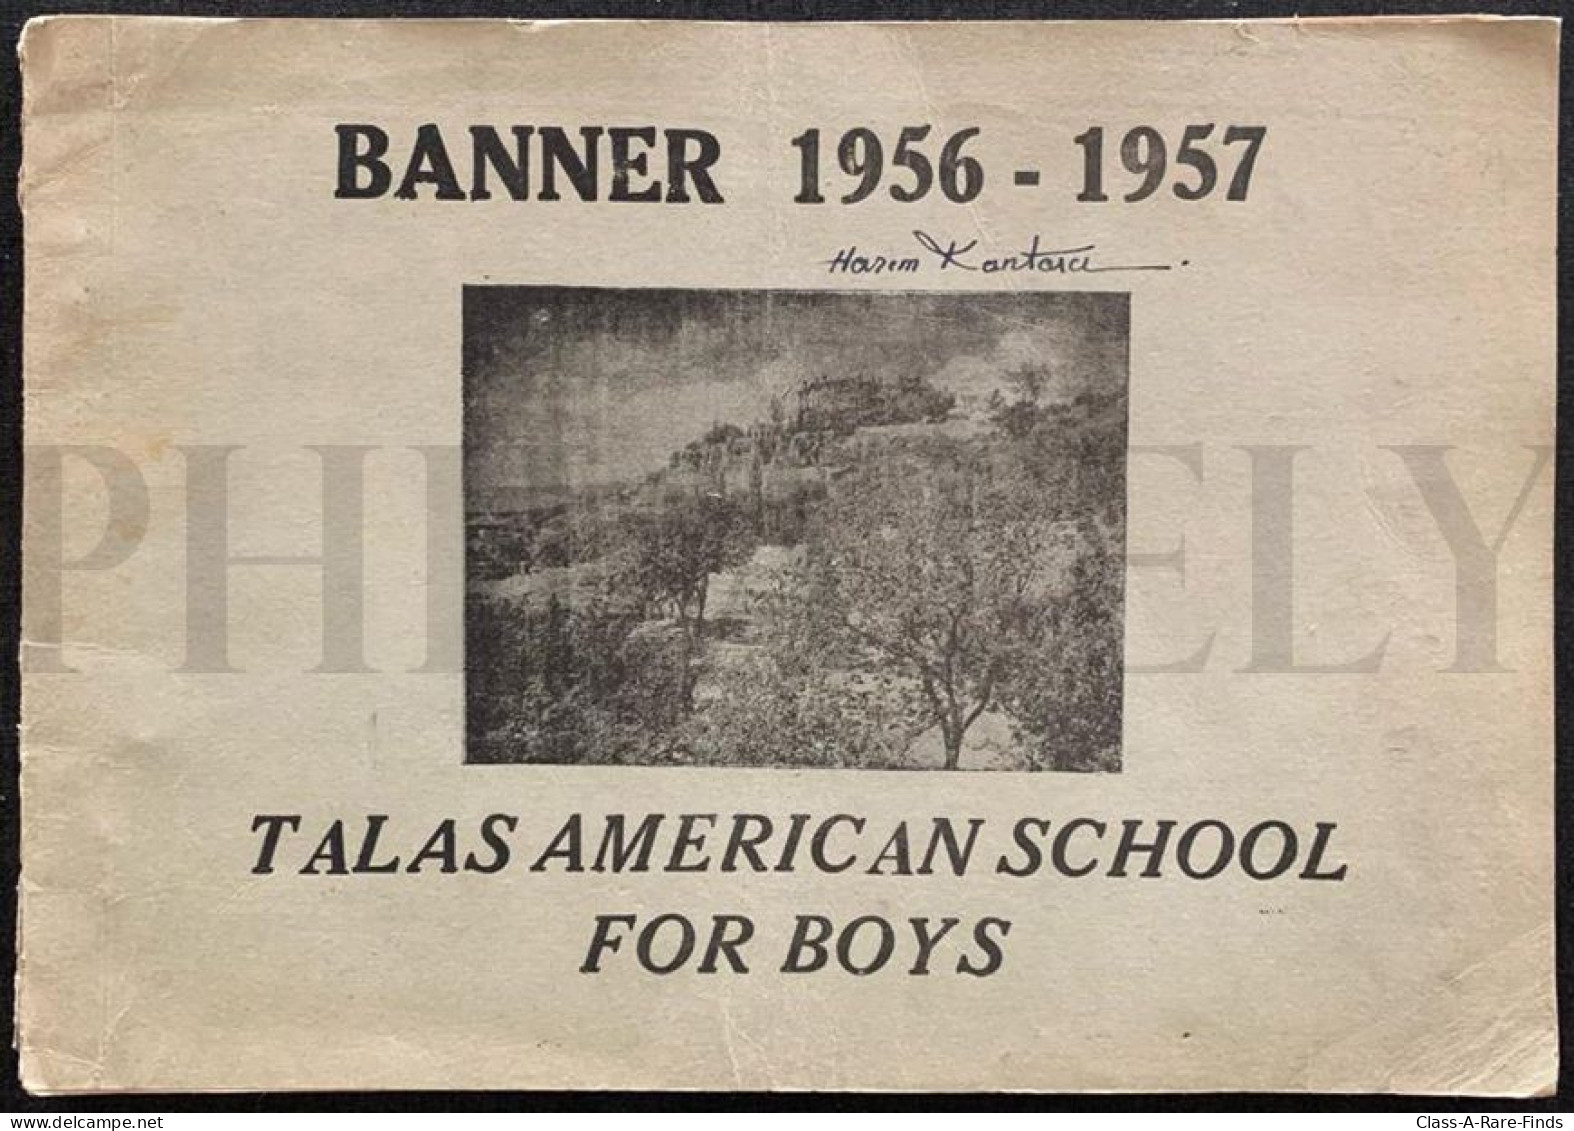 TALAS AMERICAN SCHOOL FOR BOYS - "BANNER 1956-1957" YEARBOOK KAYSERI / TURKEY / HAZIM KANTARCI / AHMET LEVENDOGLU - Diplômes & Bulletins Scolaires